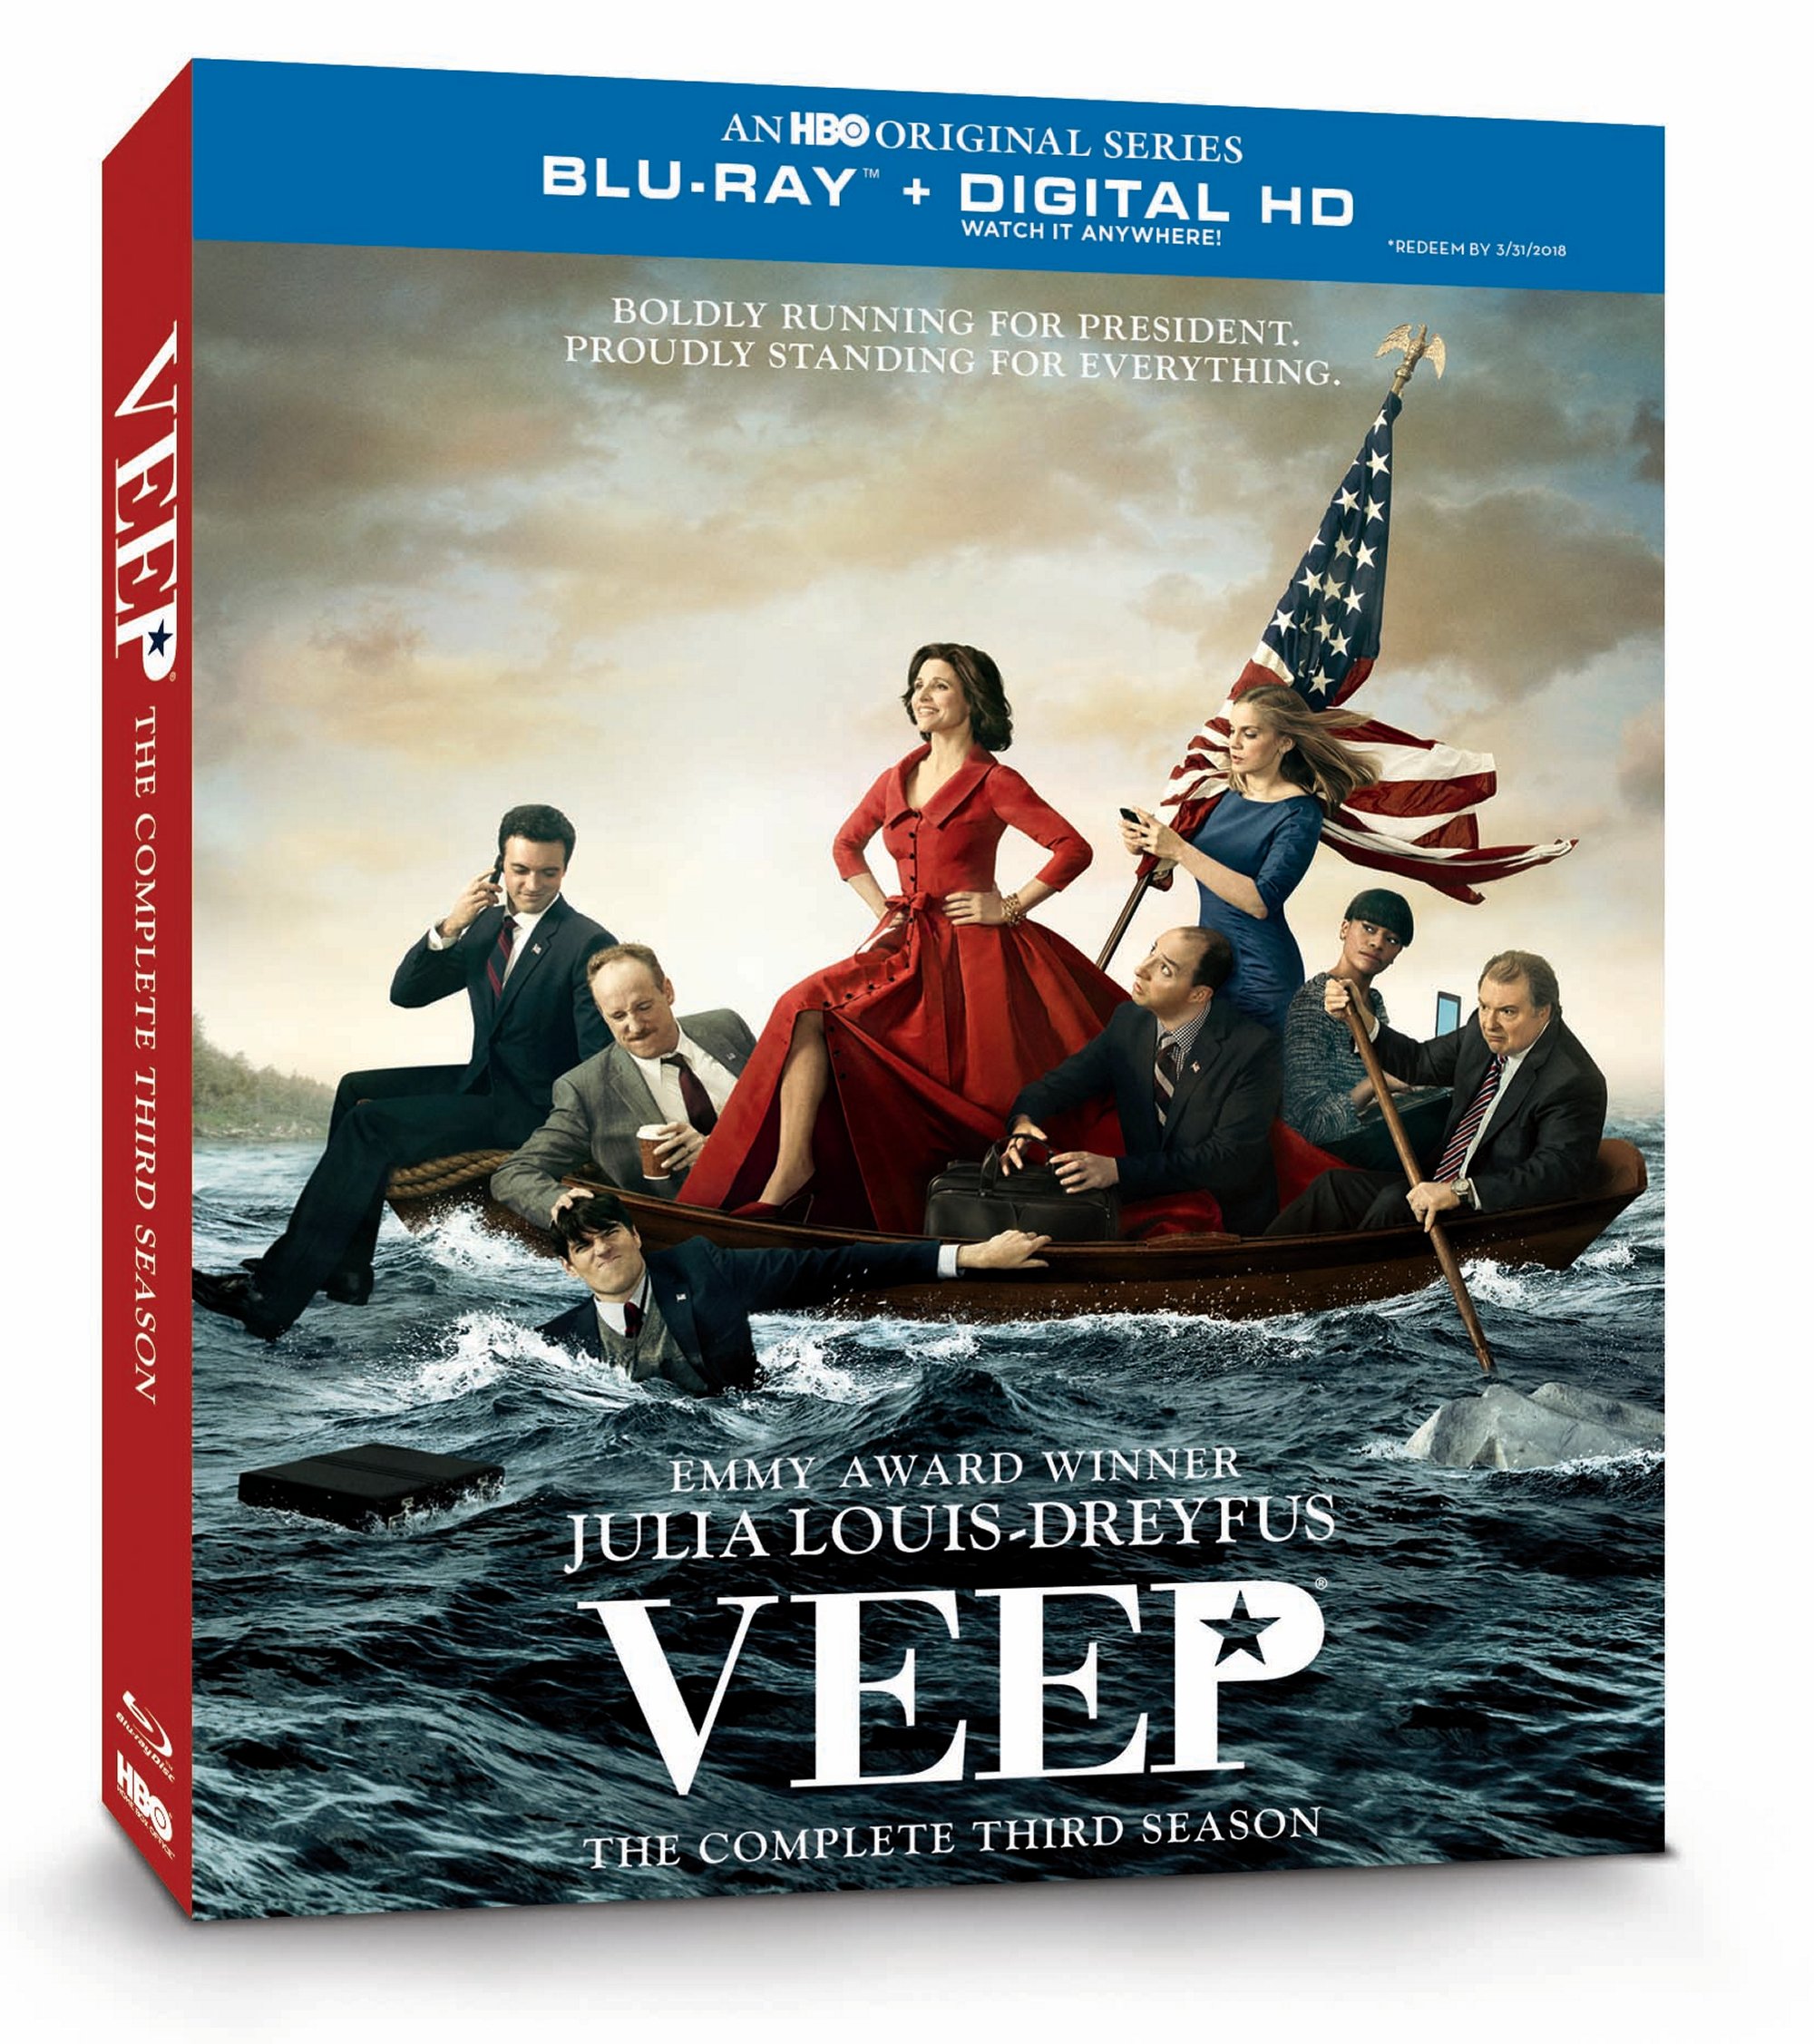 Veep: The Complete Third Season (Blu-ray + Digital HD) - Blu-ray [ 2014 ]  - Comedy Television On Blu-ray - TV Shows On GRUV